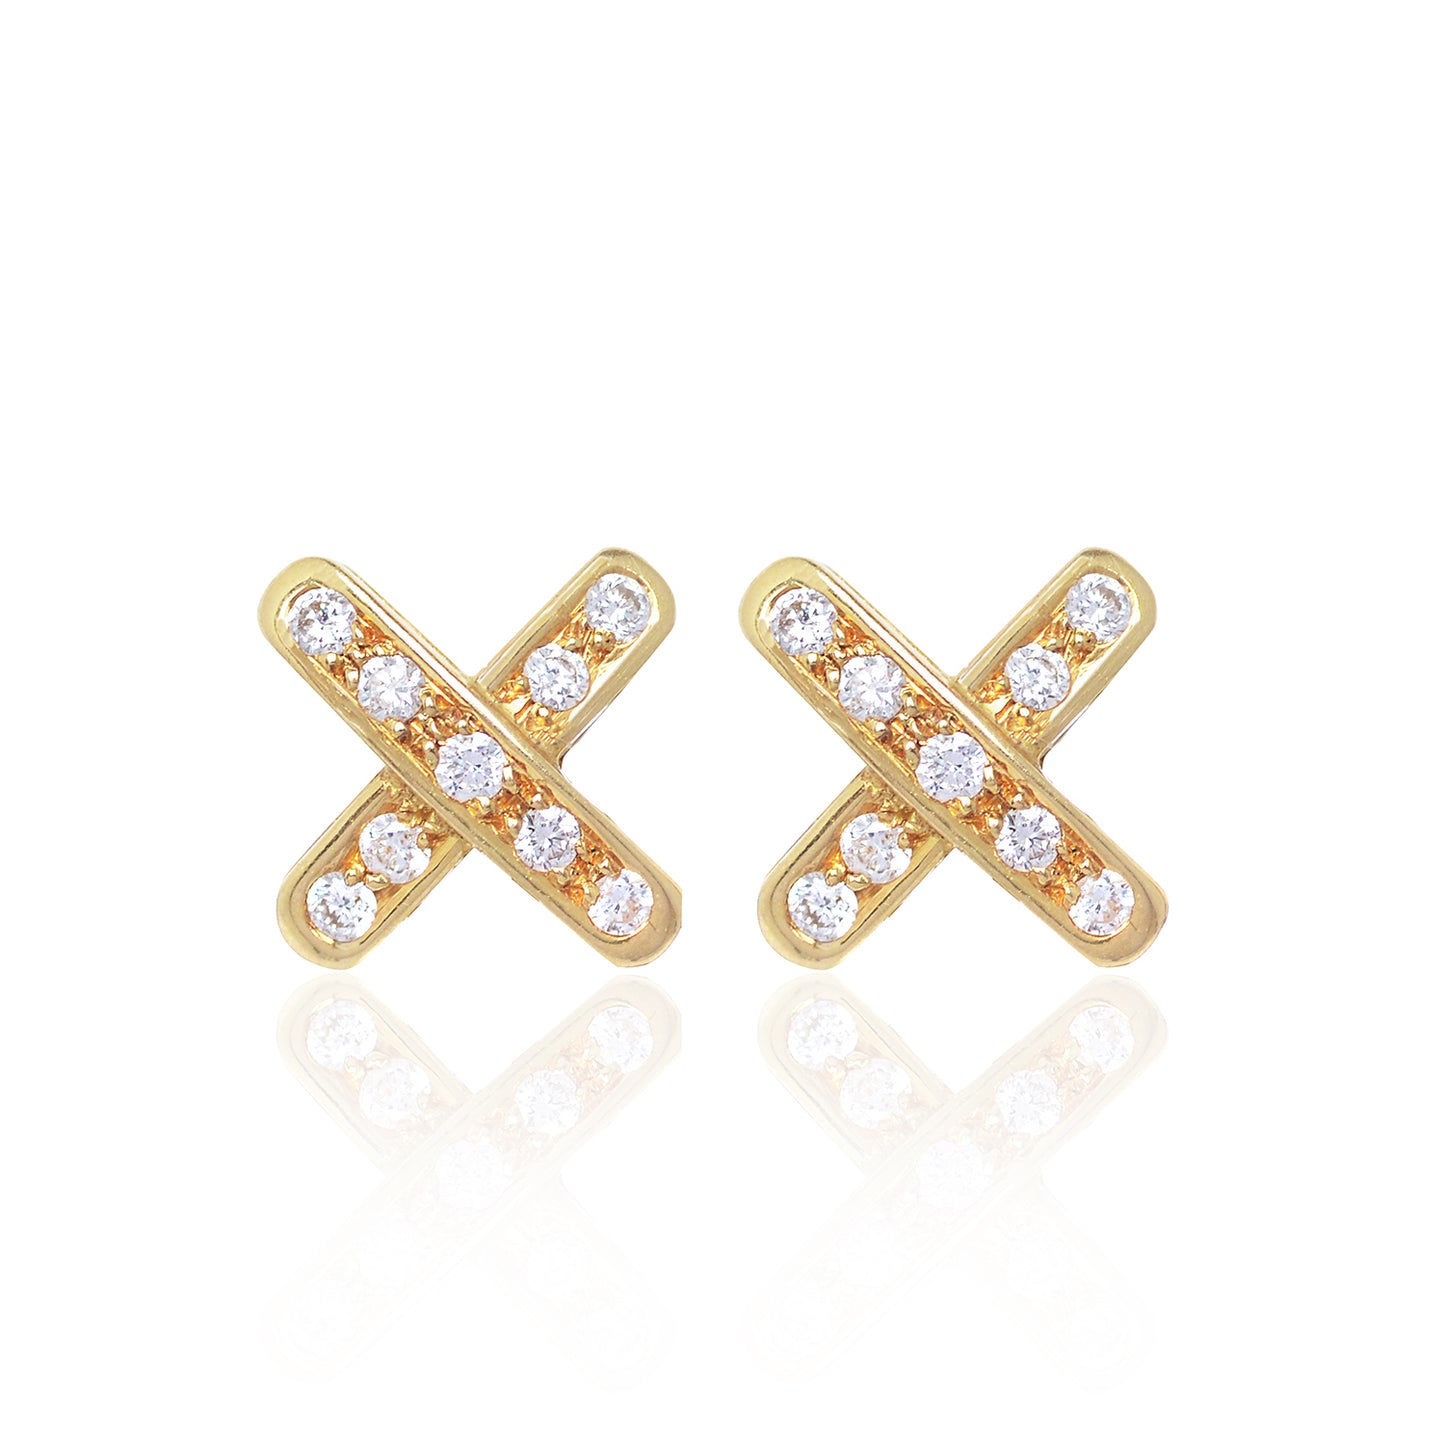 Cross Diamond Earrings set in 18ct yellow gold with 18 x 2 pointer diamonds by McFarlane Fine Jewellery